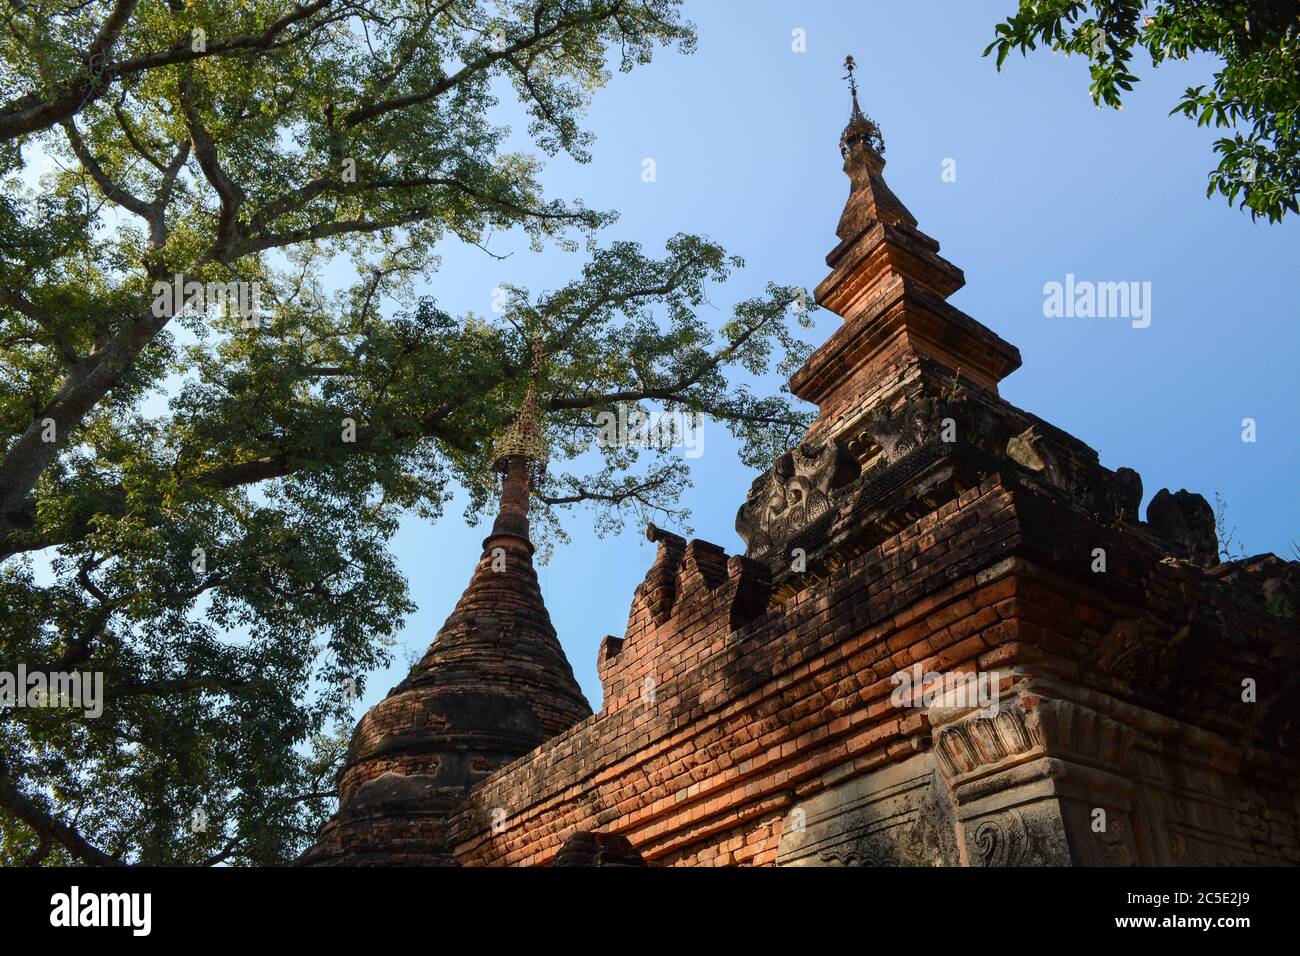 Yadana Hsimi Pagodas in Inwa, or Ava, Mandalay, Myanmar, Southeast Asia. Ruins in ancient imperial capital of successive Burmese kingdoms. Stock Photo